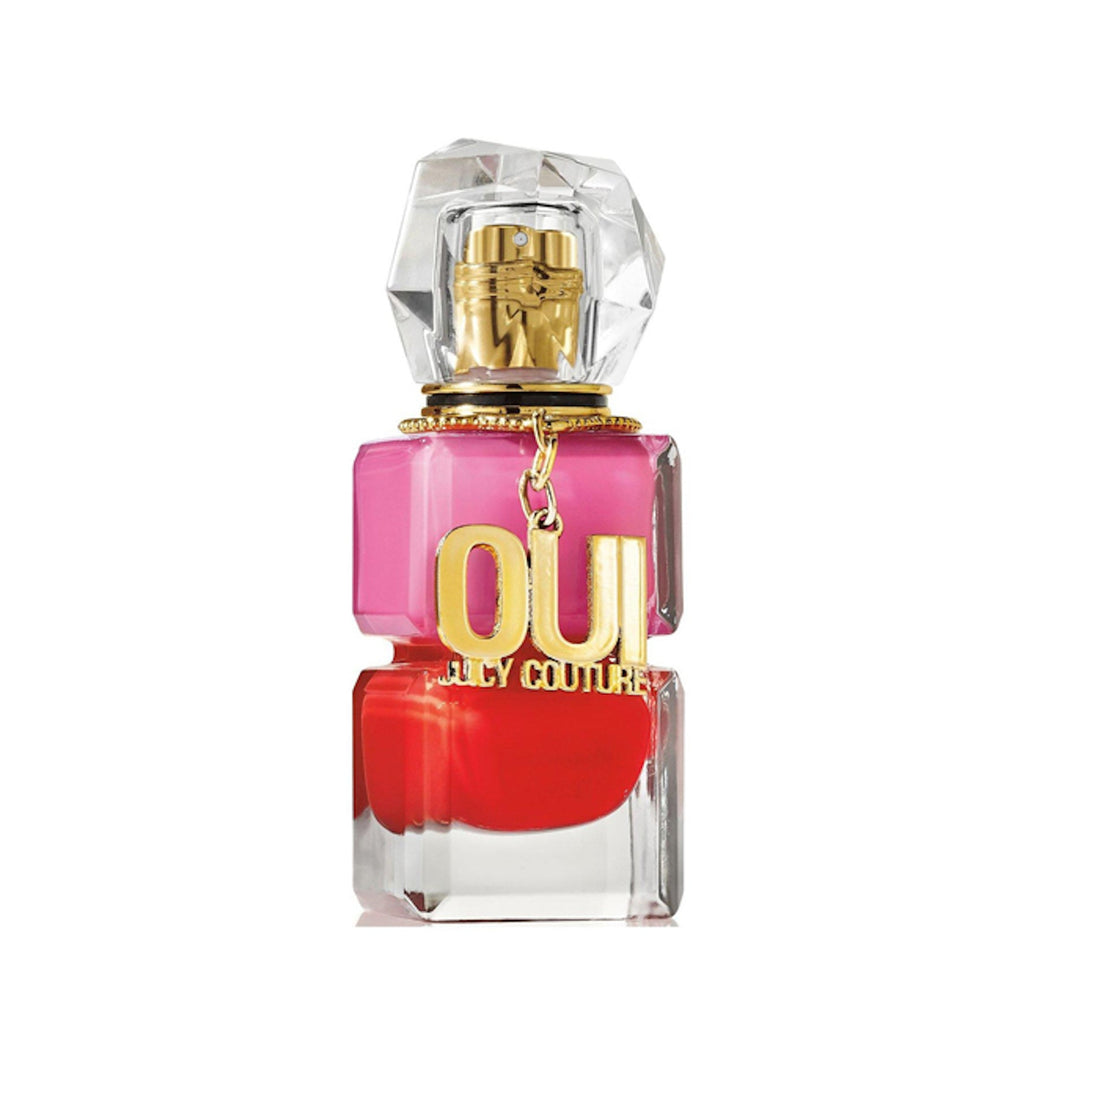 Oui Juicy Couture Eau De Parfum 30ml Spray ThePerfumeWorld